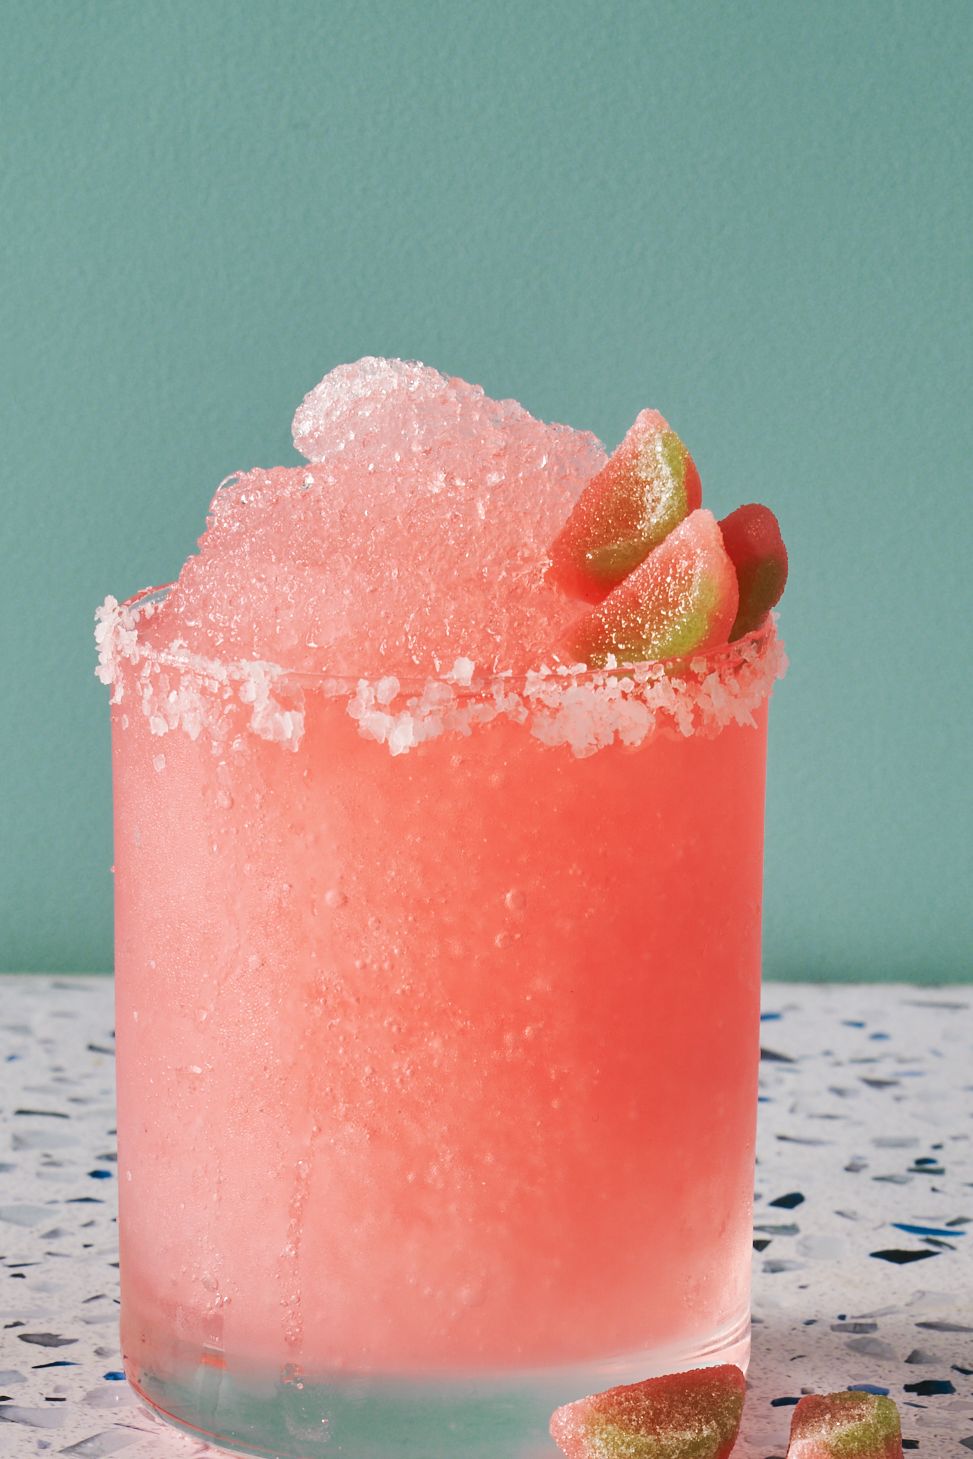 Frozen Drink Mixes by Swirled Ice - Slush Mix, Margarita Mix